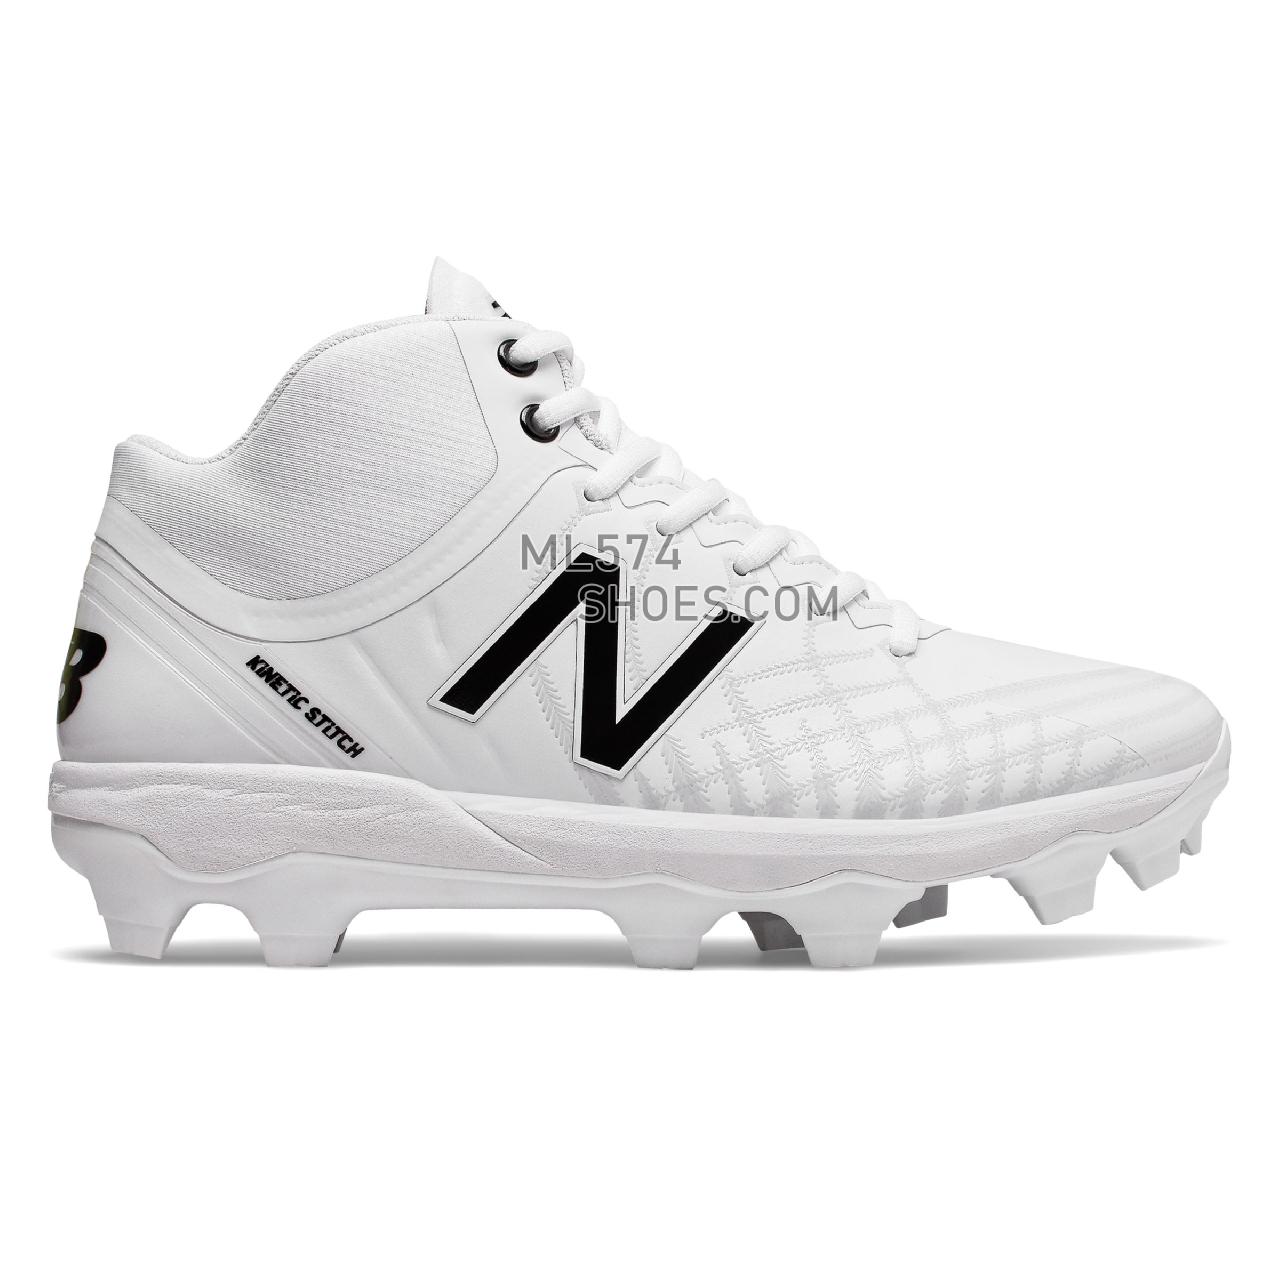 New Balance 4040v5 Mid-Cut TPU - Men's Baseball Turf - White - PM4040W5